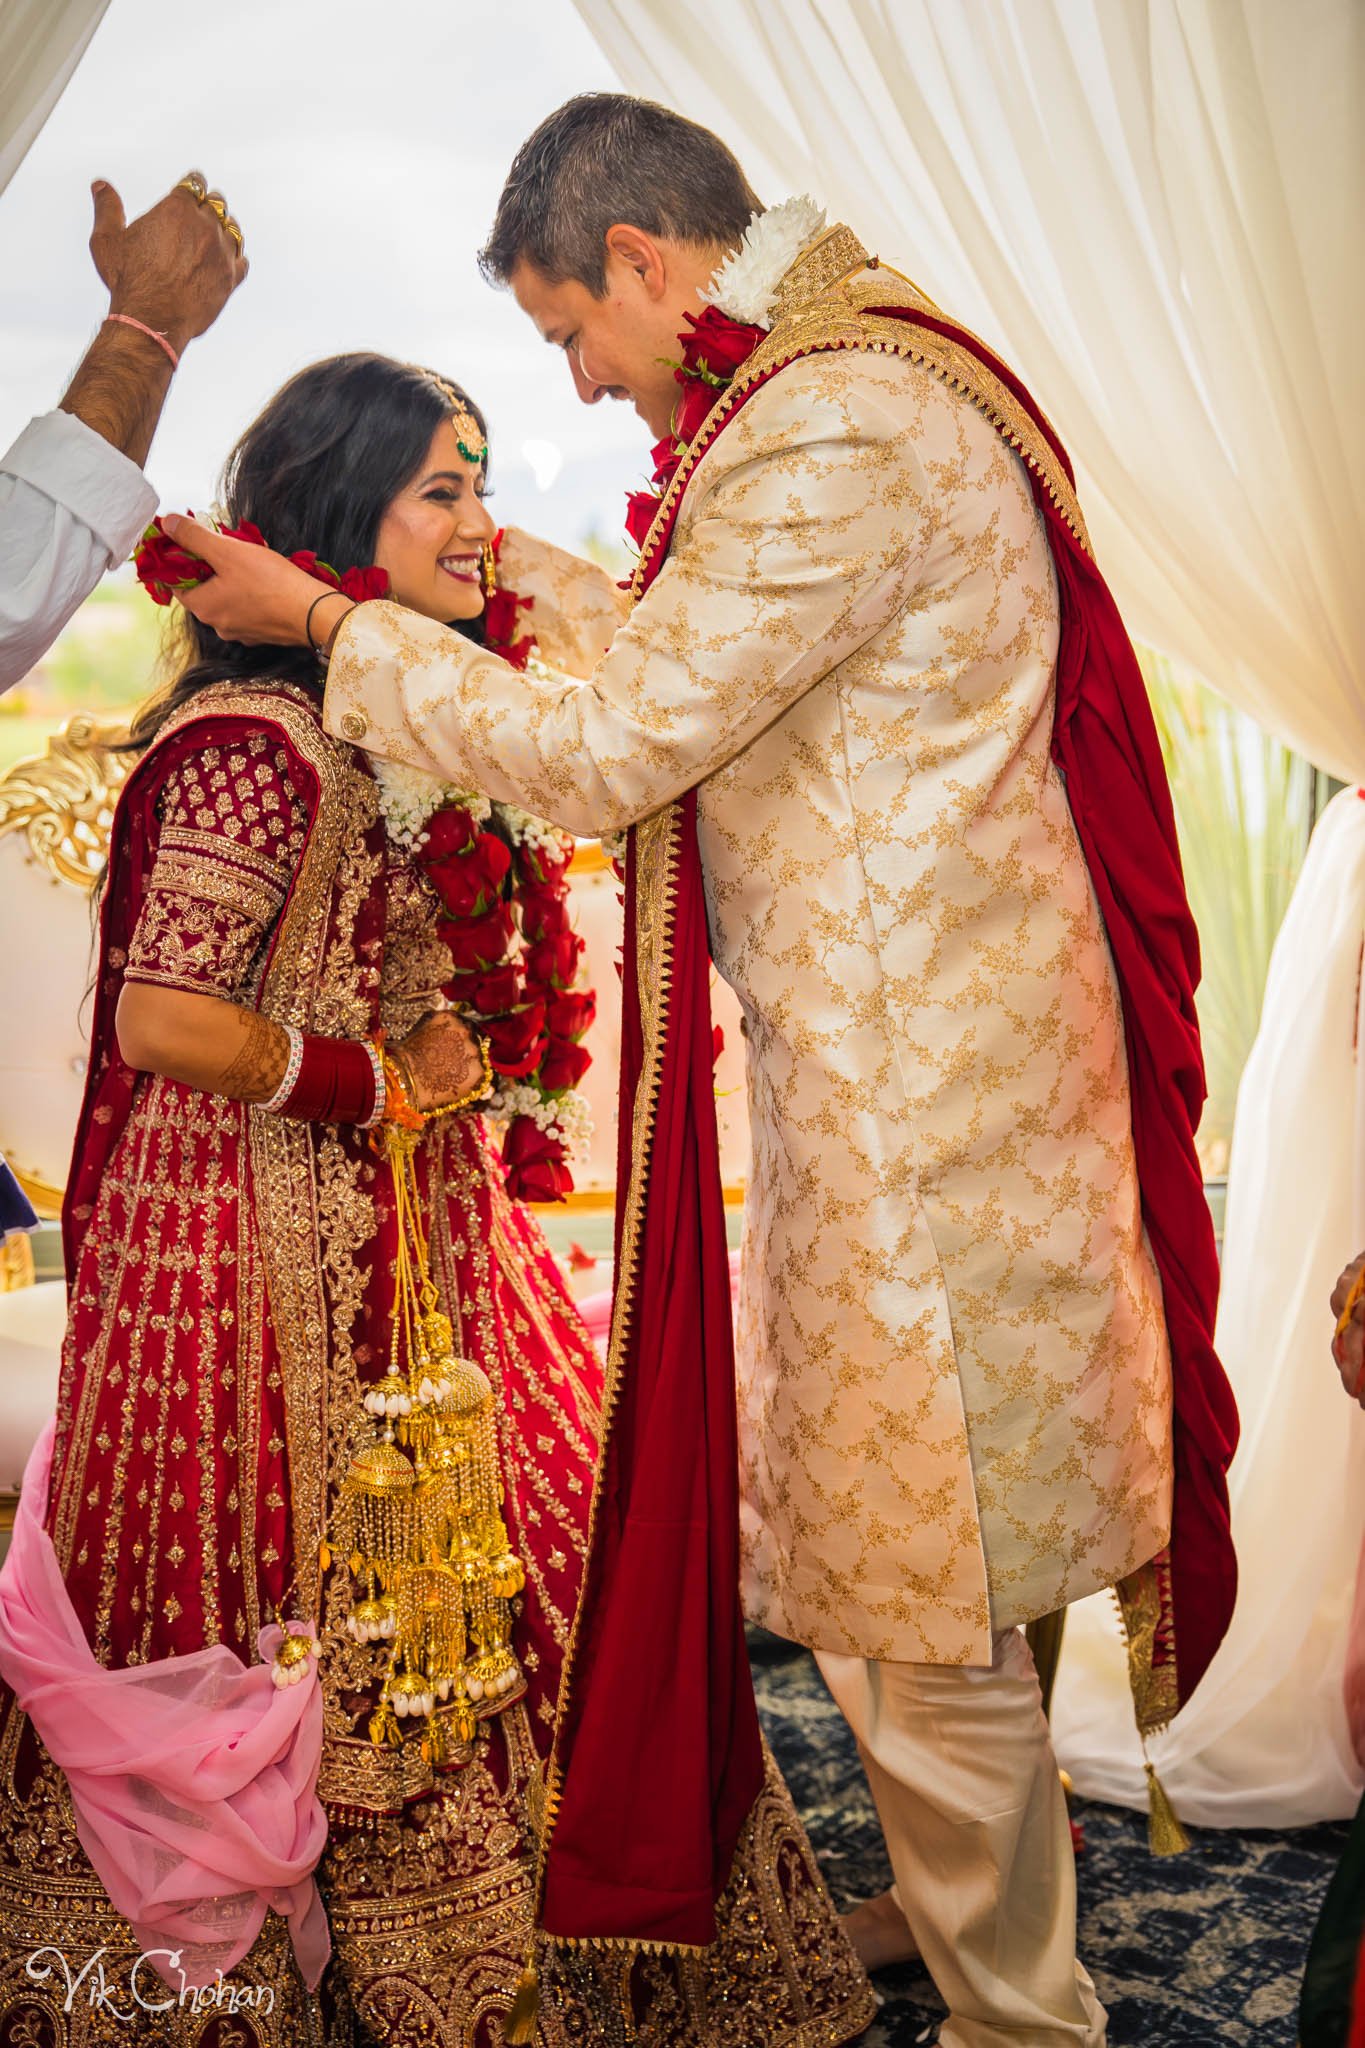 2022-06-09-Annie-&-Steven-Las-Vegas-Indian-Wedding-Ceremony-Photography-Vik-Chohan-Photography-Photo-Booth-Social-Media-VCP-158.jpg